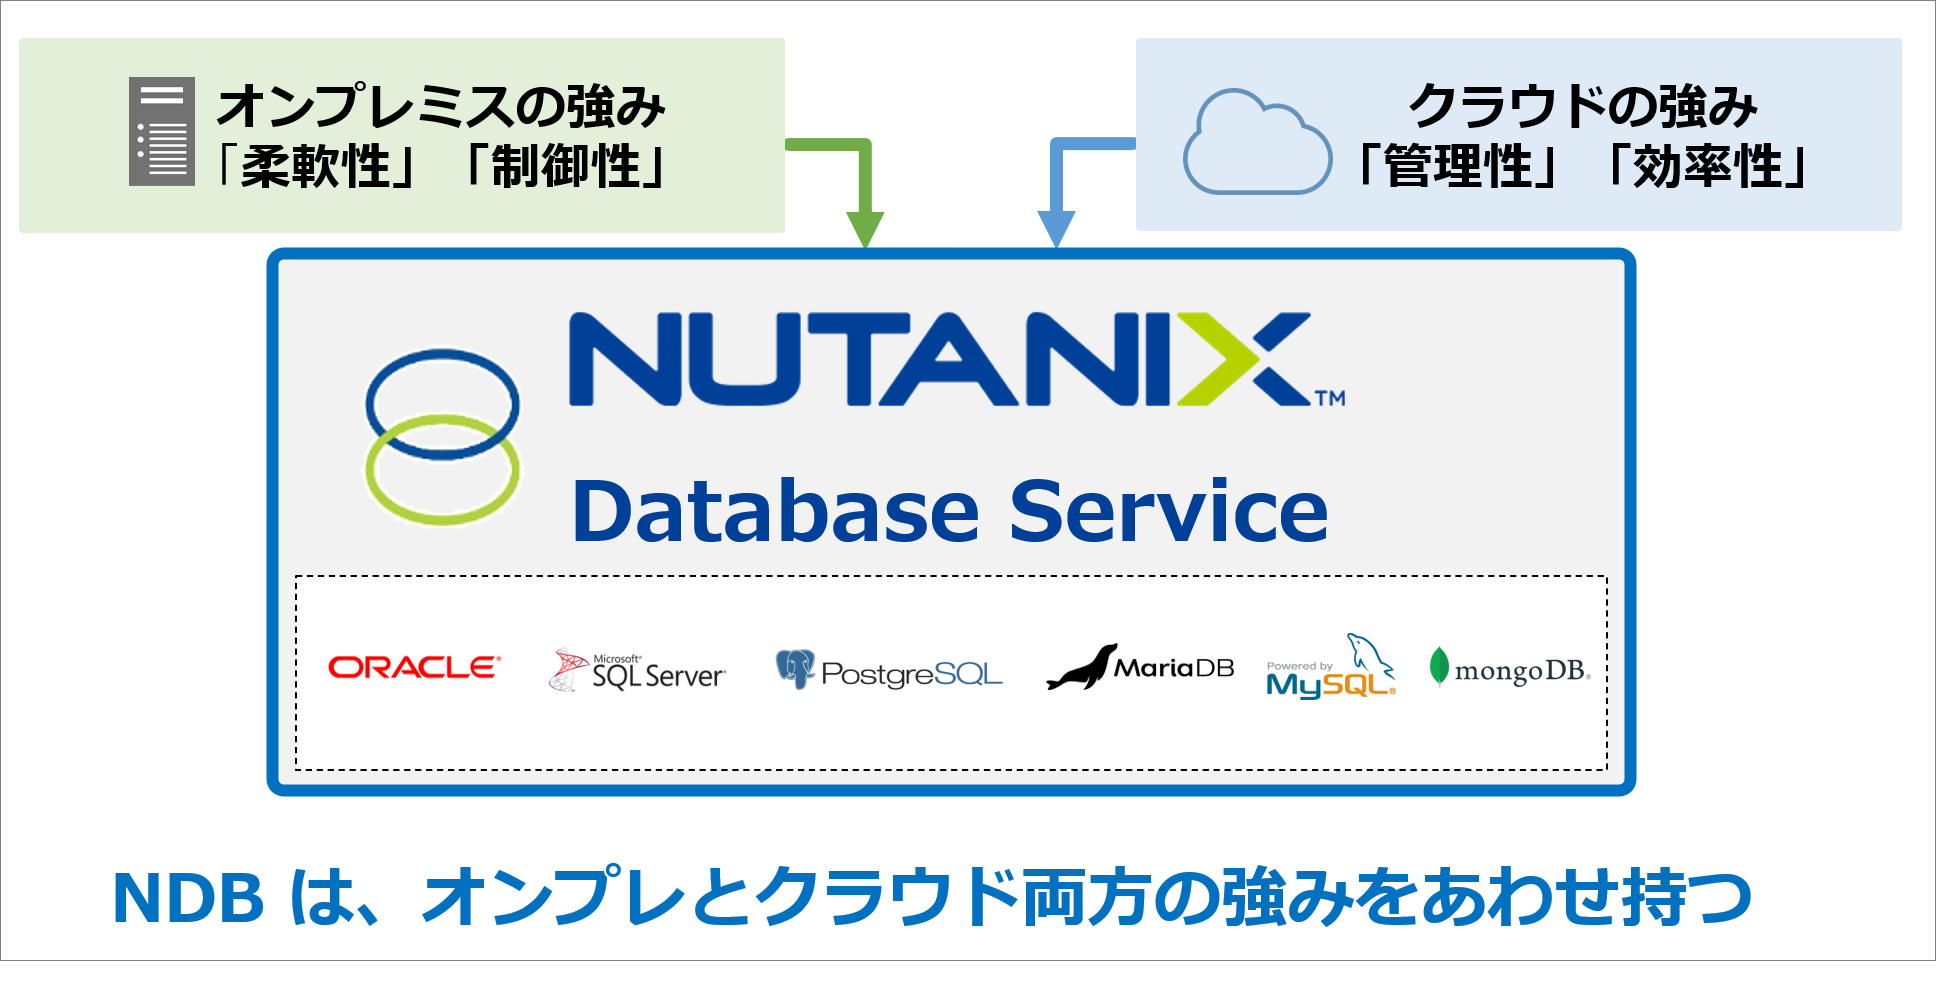 nutanix_database_service_10a-gaiyou.png